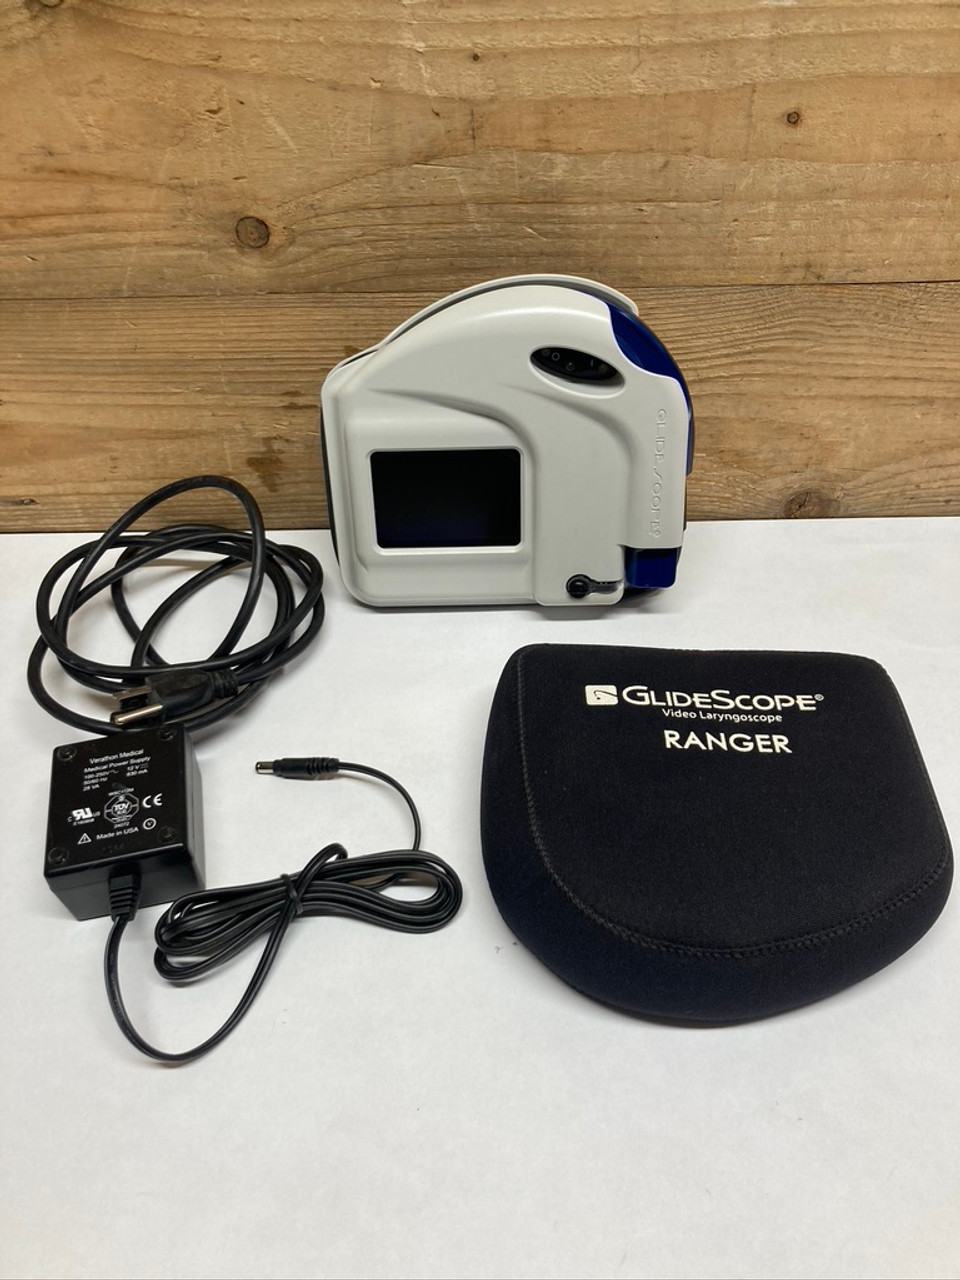 Glidescope Ranger Video Laryngoscope TICS-38-10528 Verathon Medical